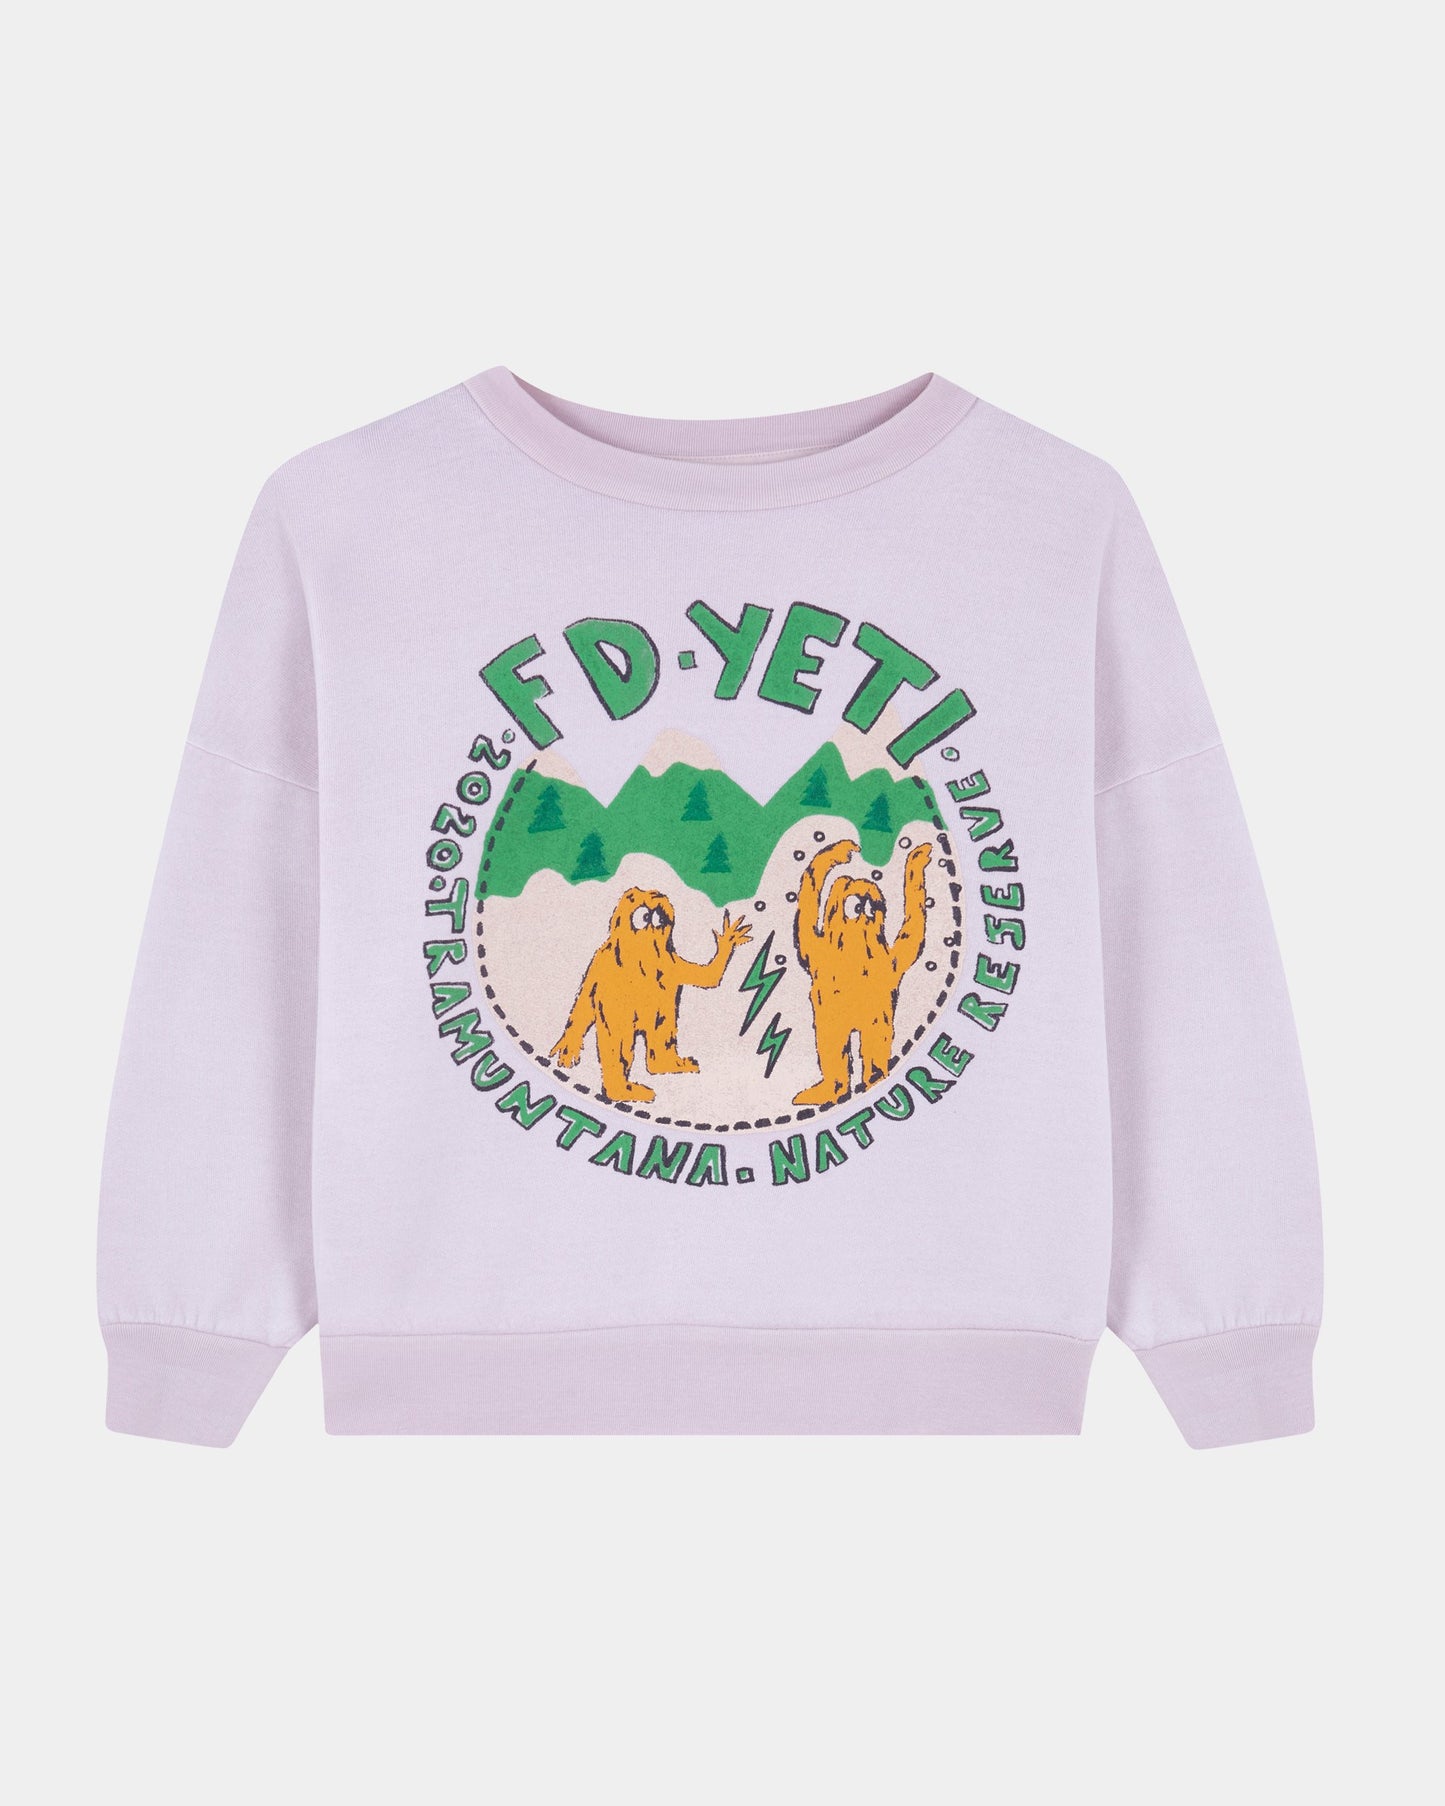 FD Yeti Adult Sweatshirt